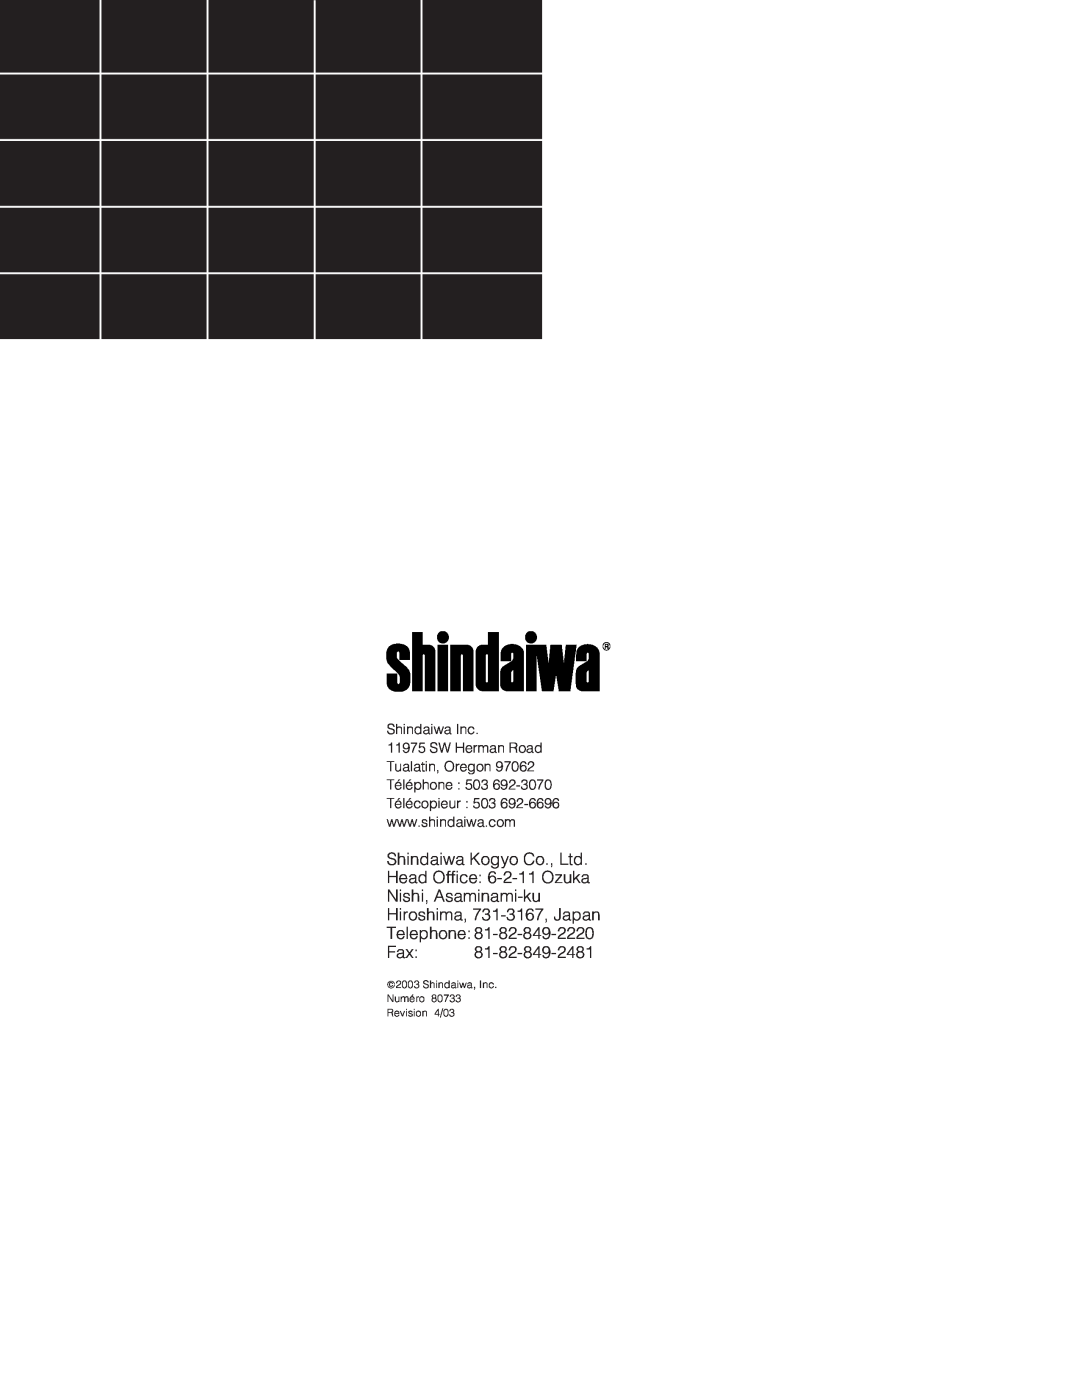 Shindaiwa PB2500, 80732 manual Nishi, Asaminami-ku Hiroshima, 731-3167,Japan, Telephone Fax, Shindaiwa Inc 